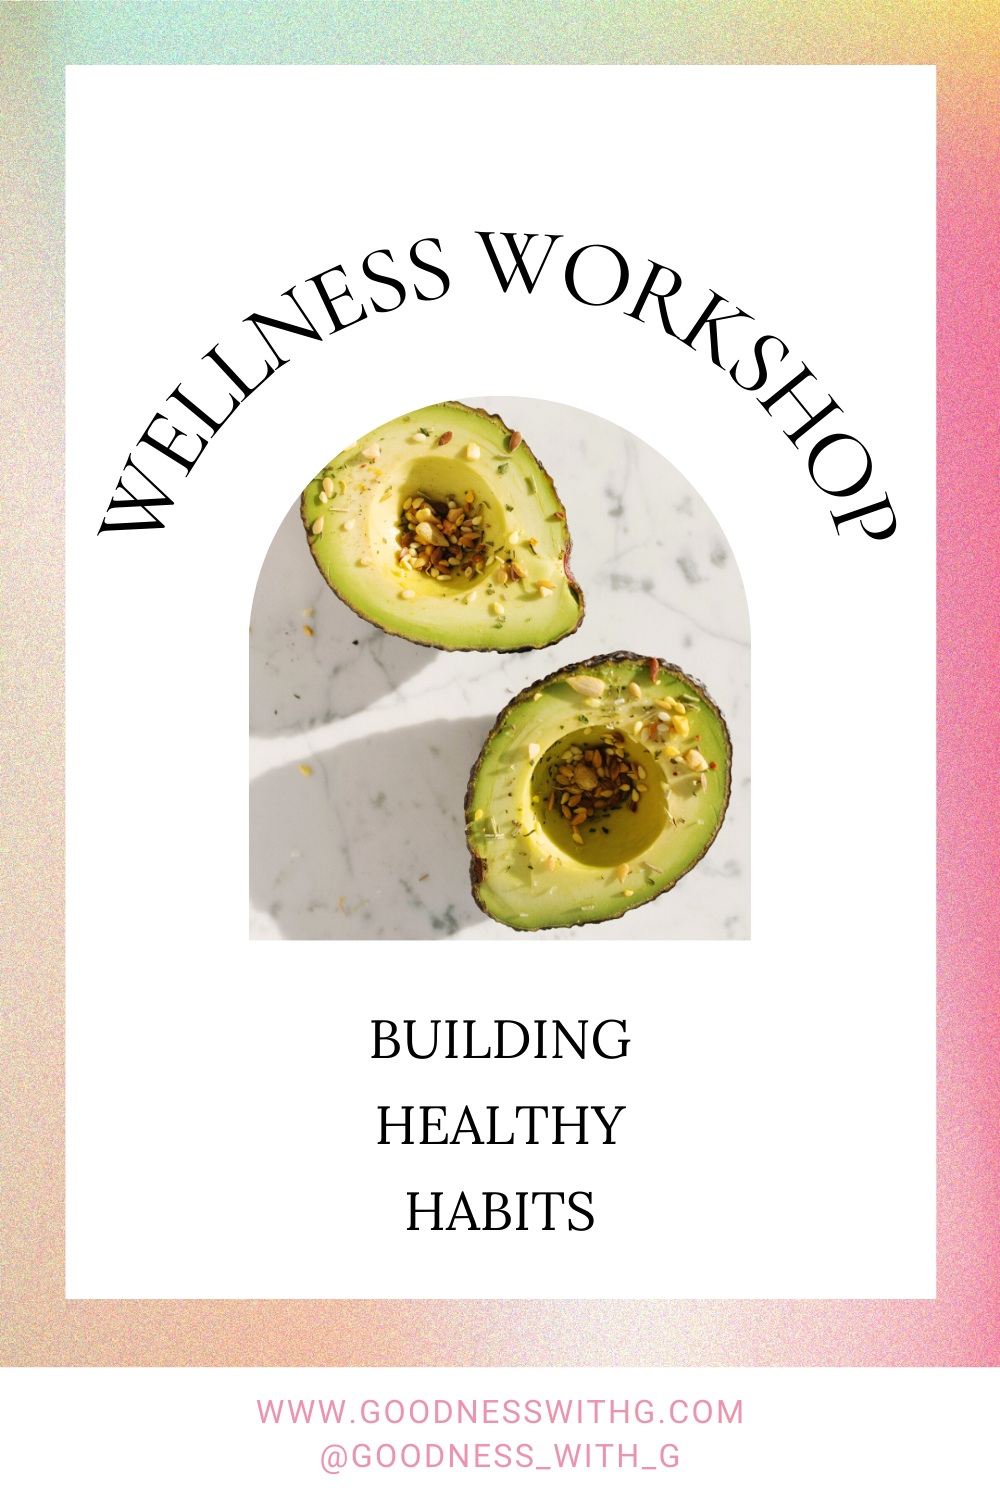 Wellness Workshop: Building Healthy Habits